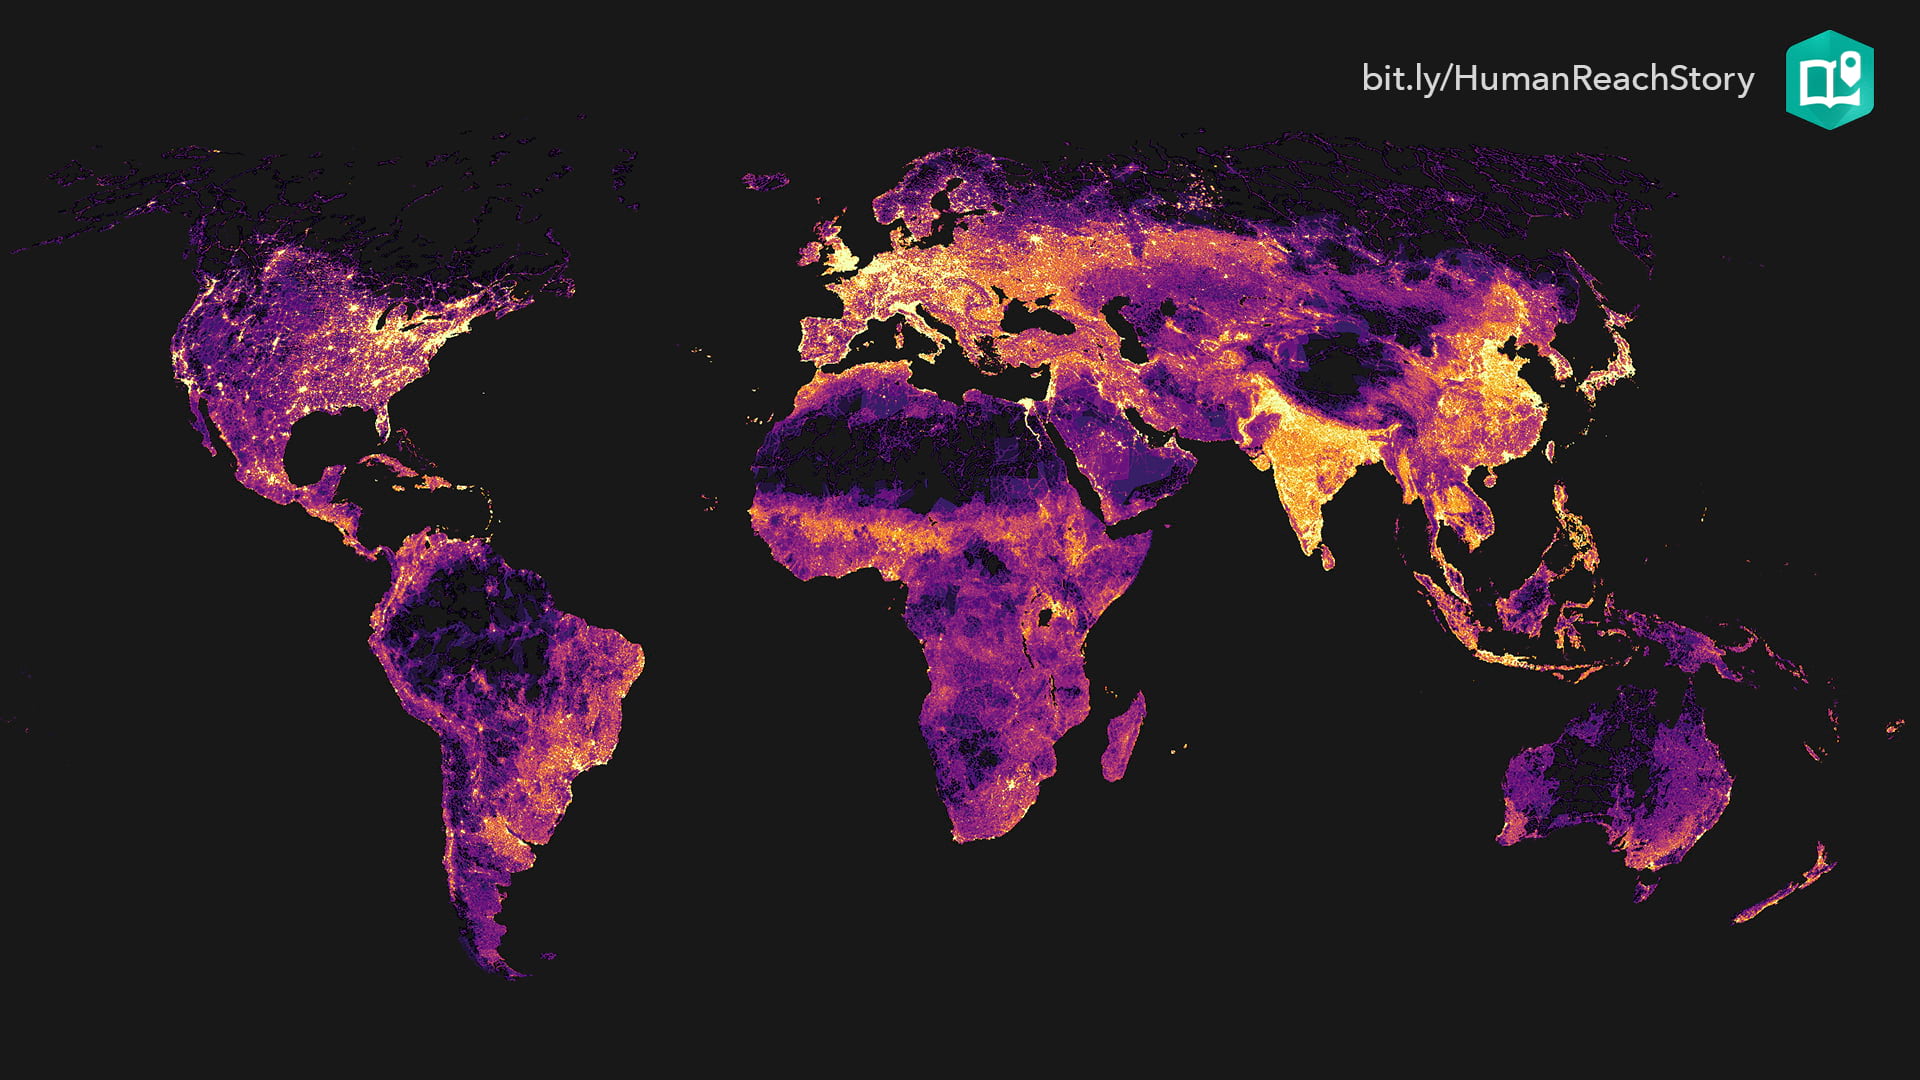 The global human footprint map